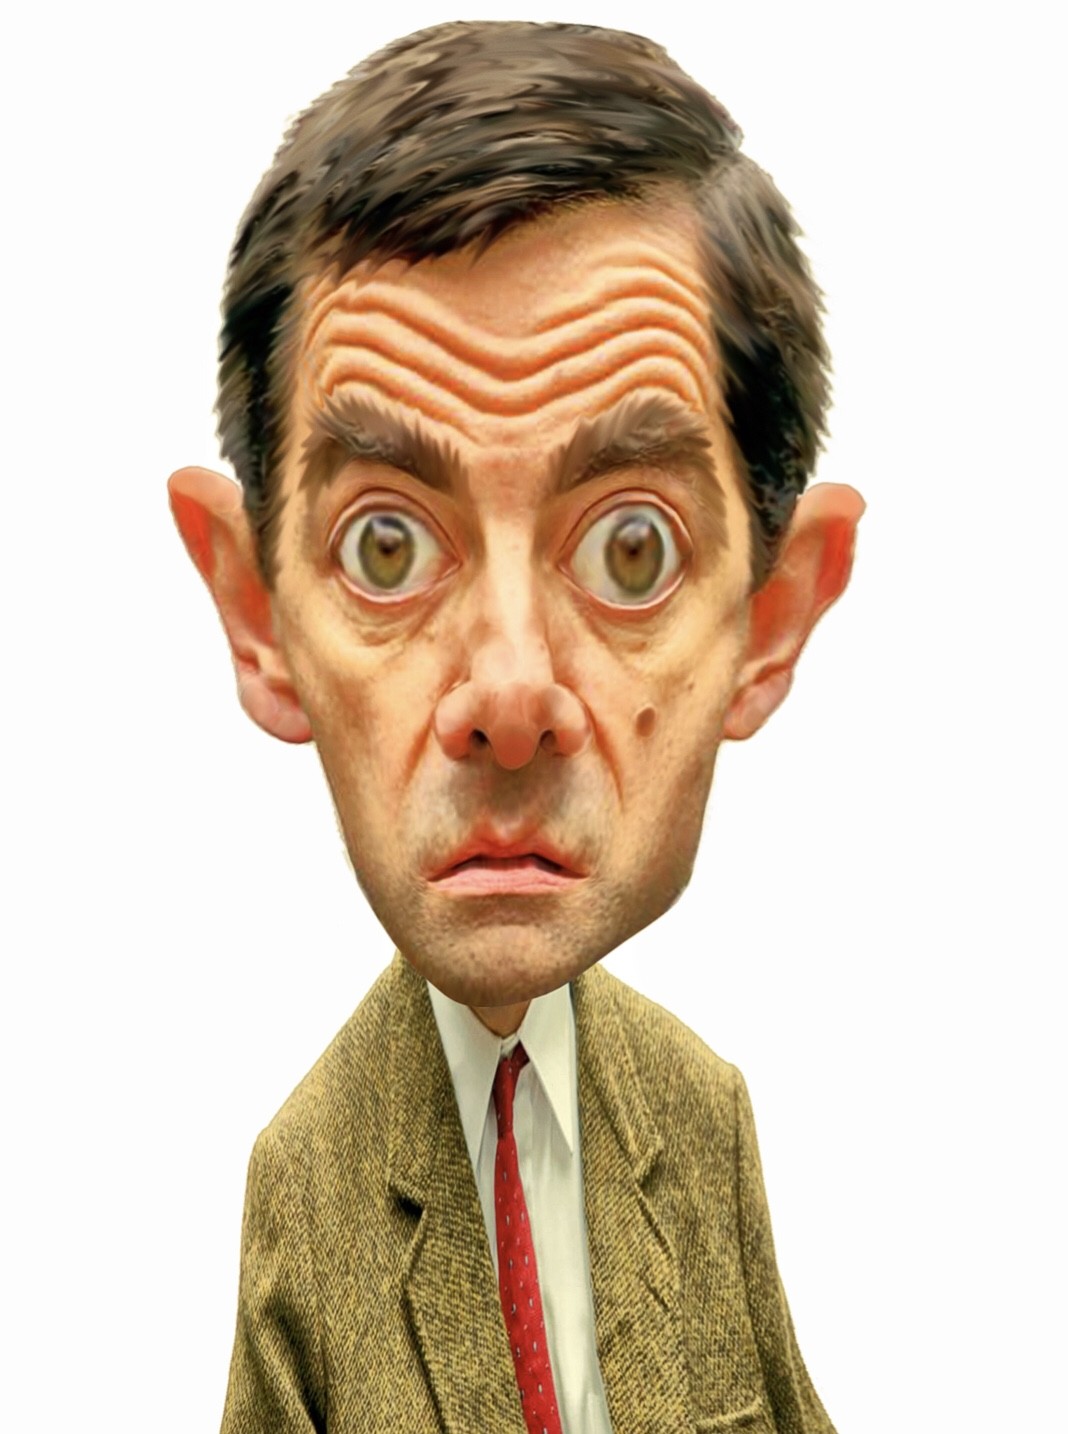 ArtStation - Mr. Bean Caricature